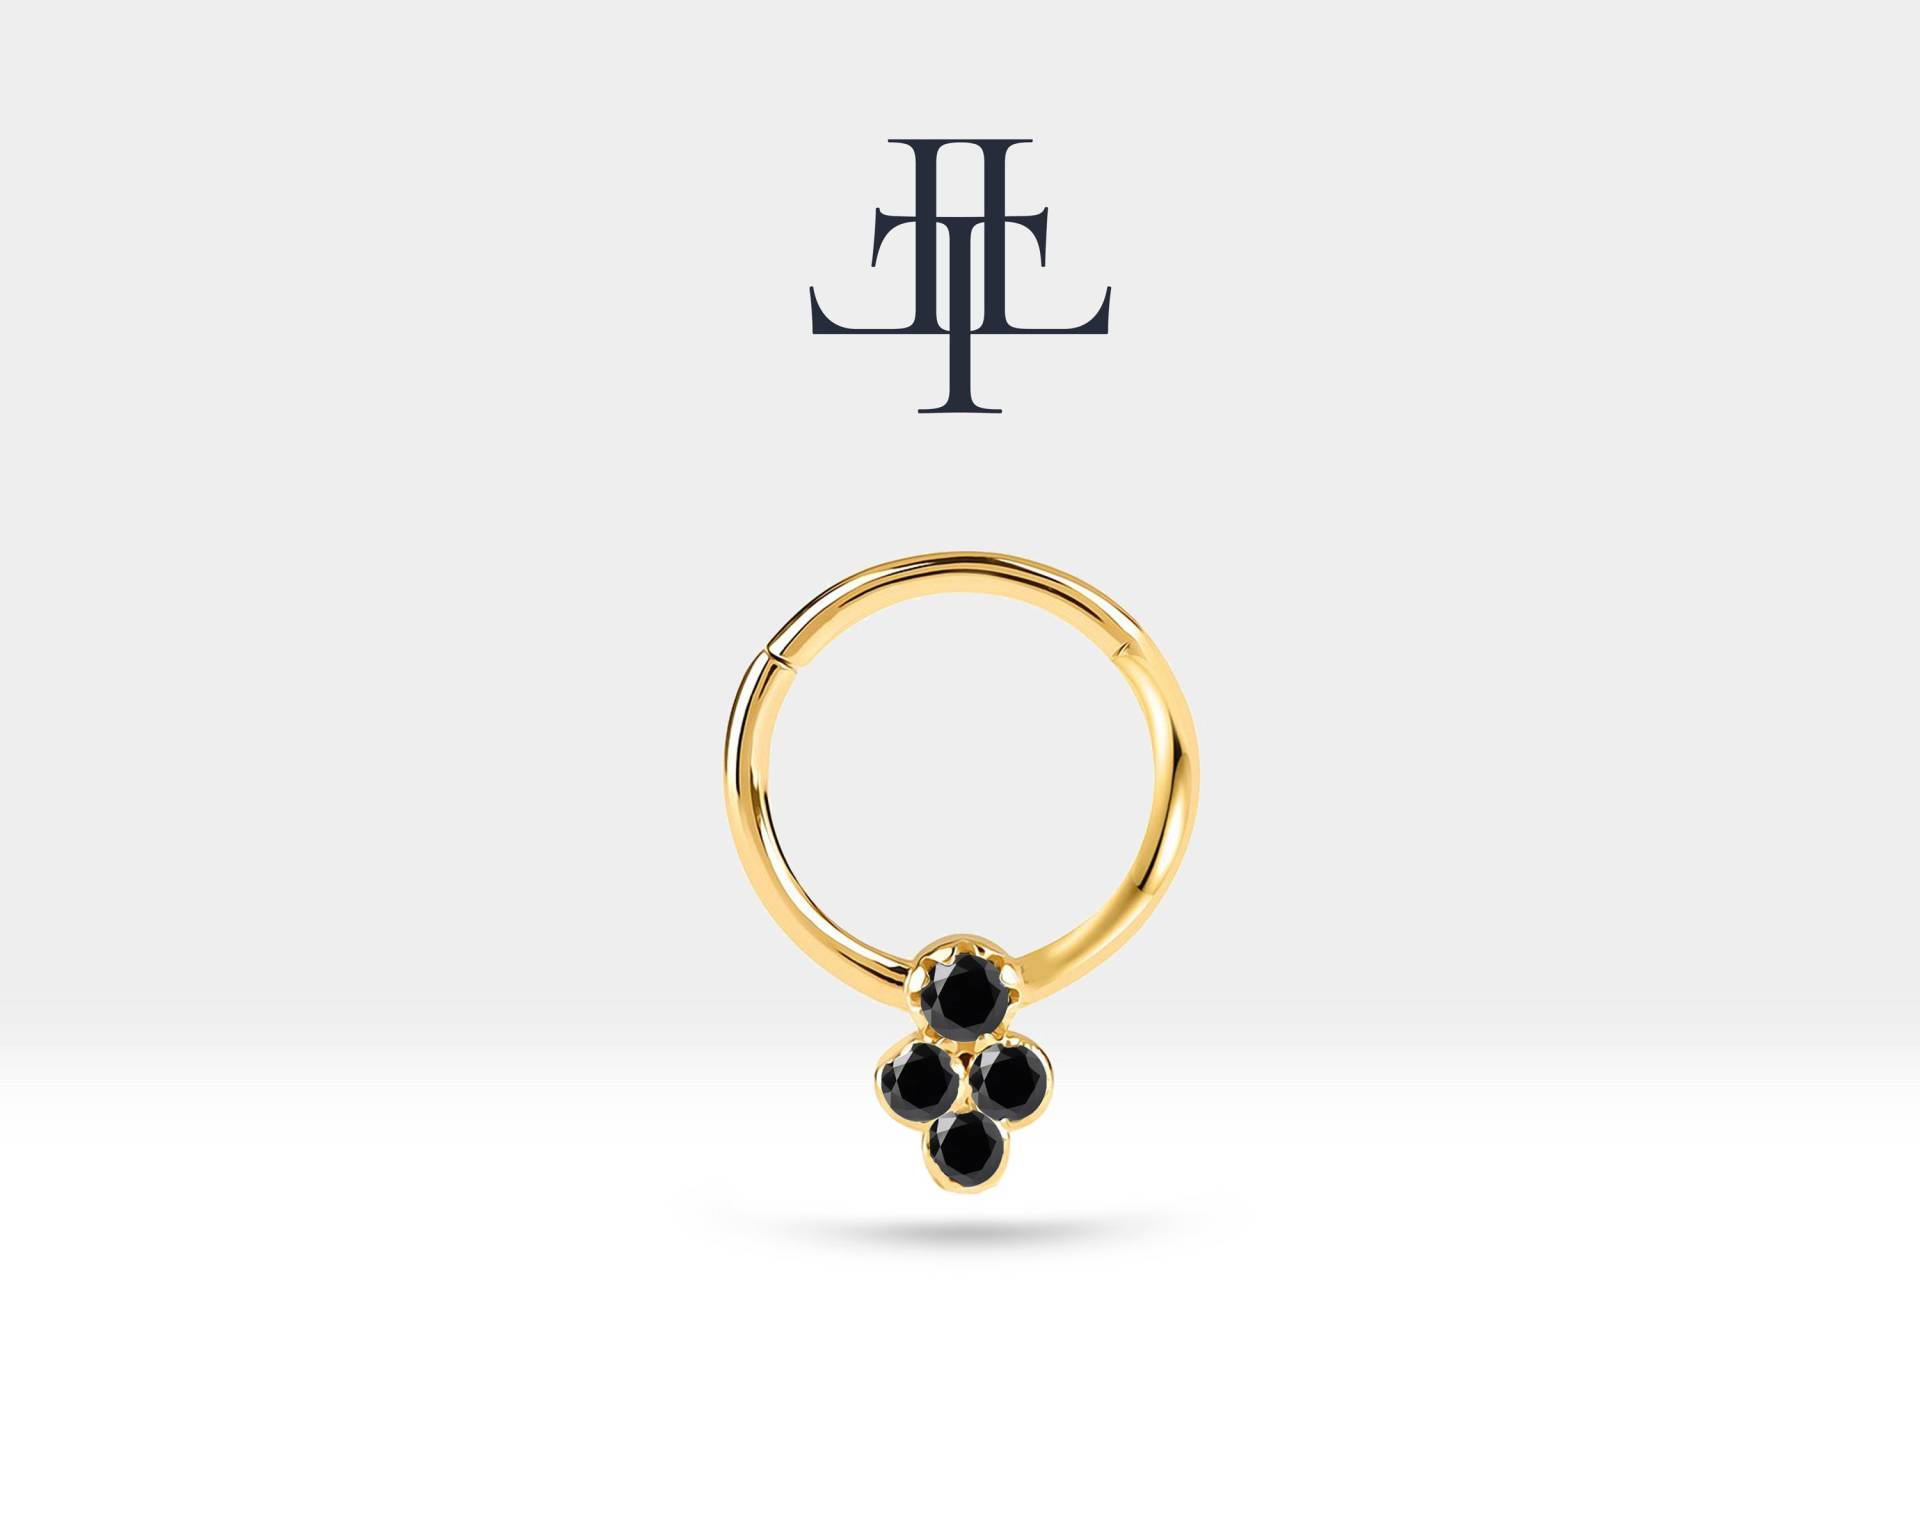 Knorpel Hoop Grapevine Form Black Diamond Clicker Piercing, Einzelohrring, 14K Gelbgold, 16G | 1.20 | Lc00013B von Latualucejewelry